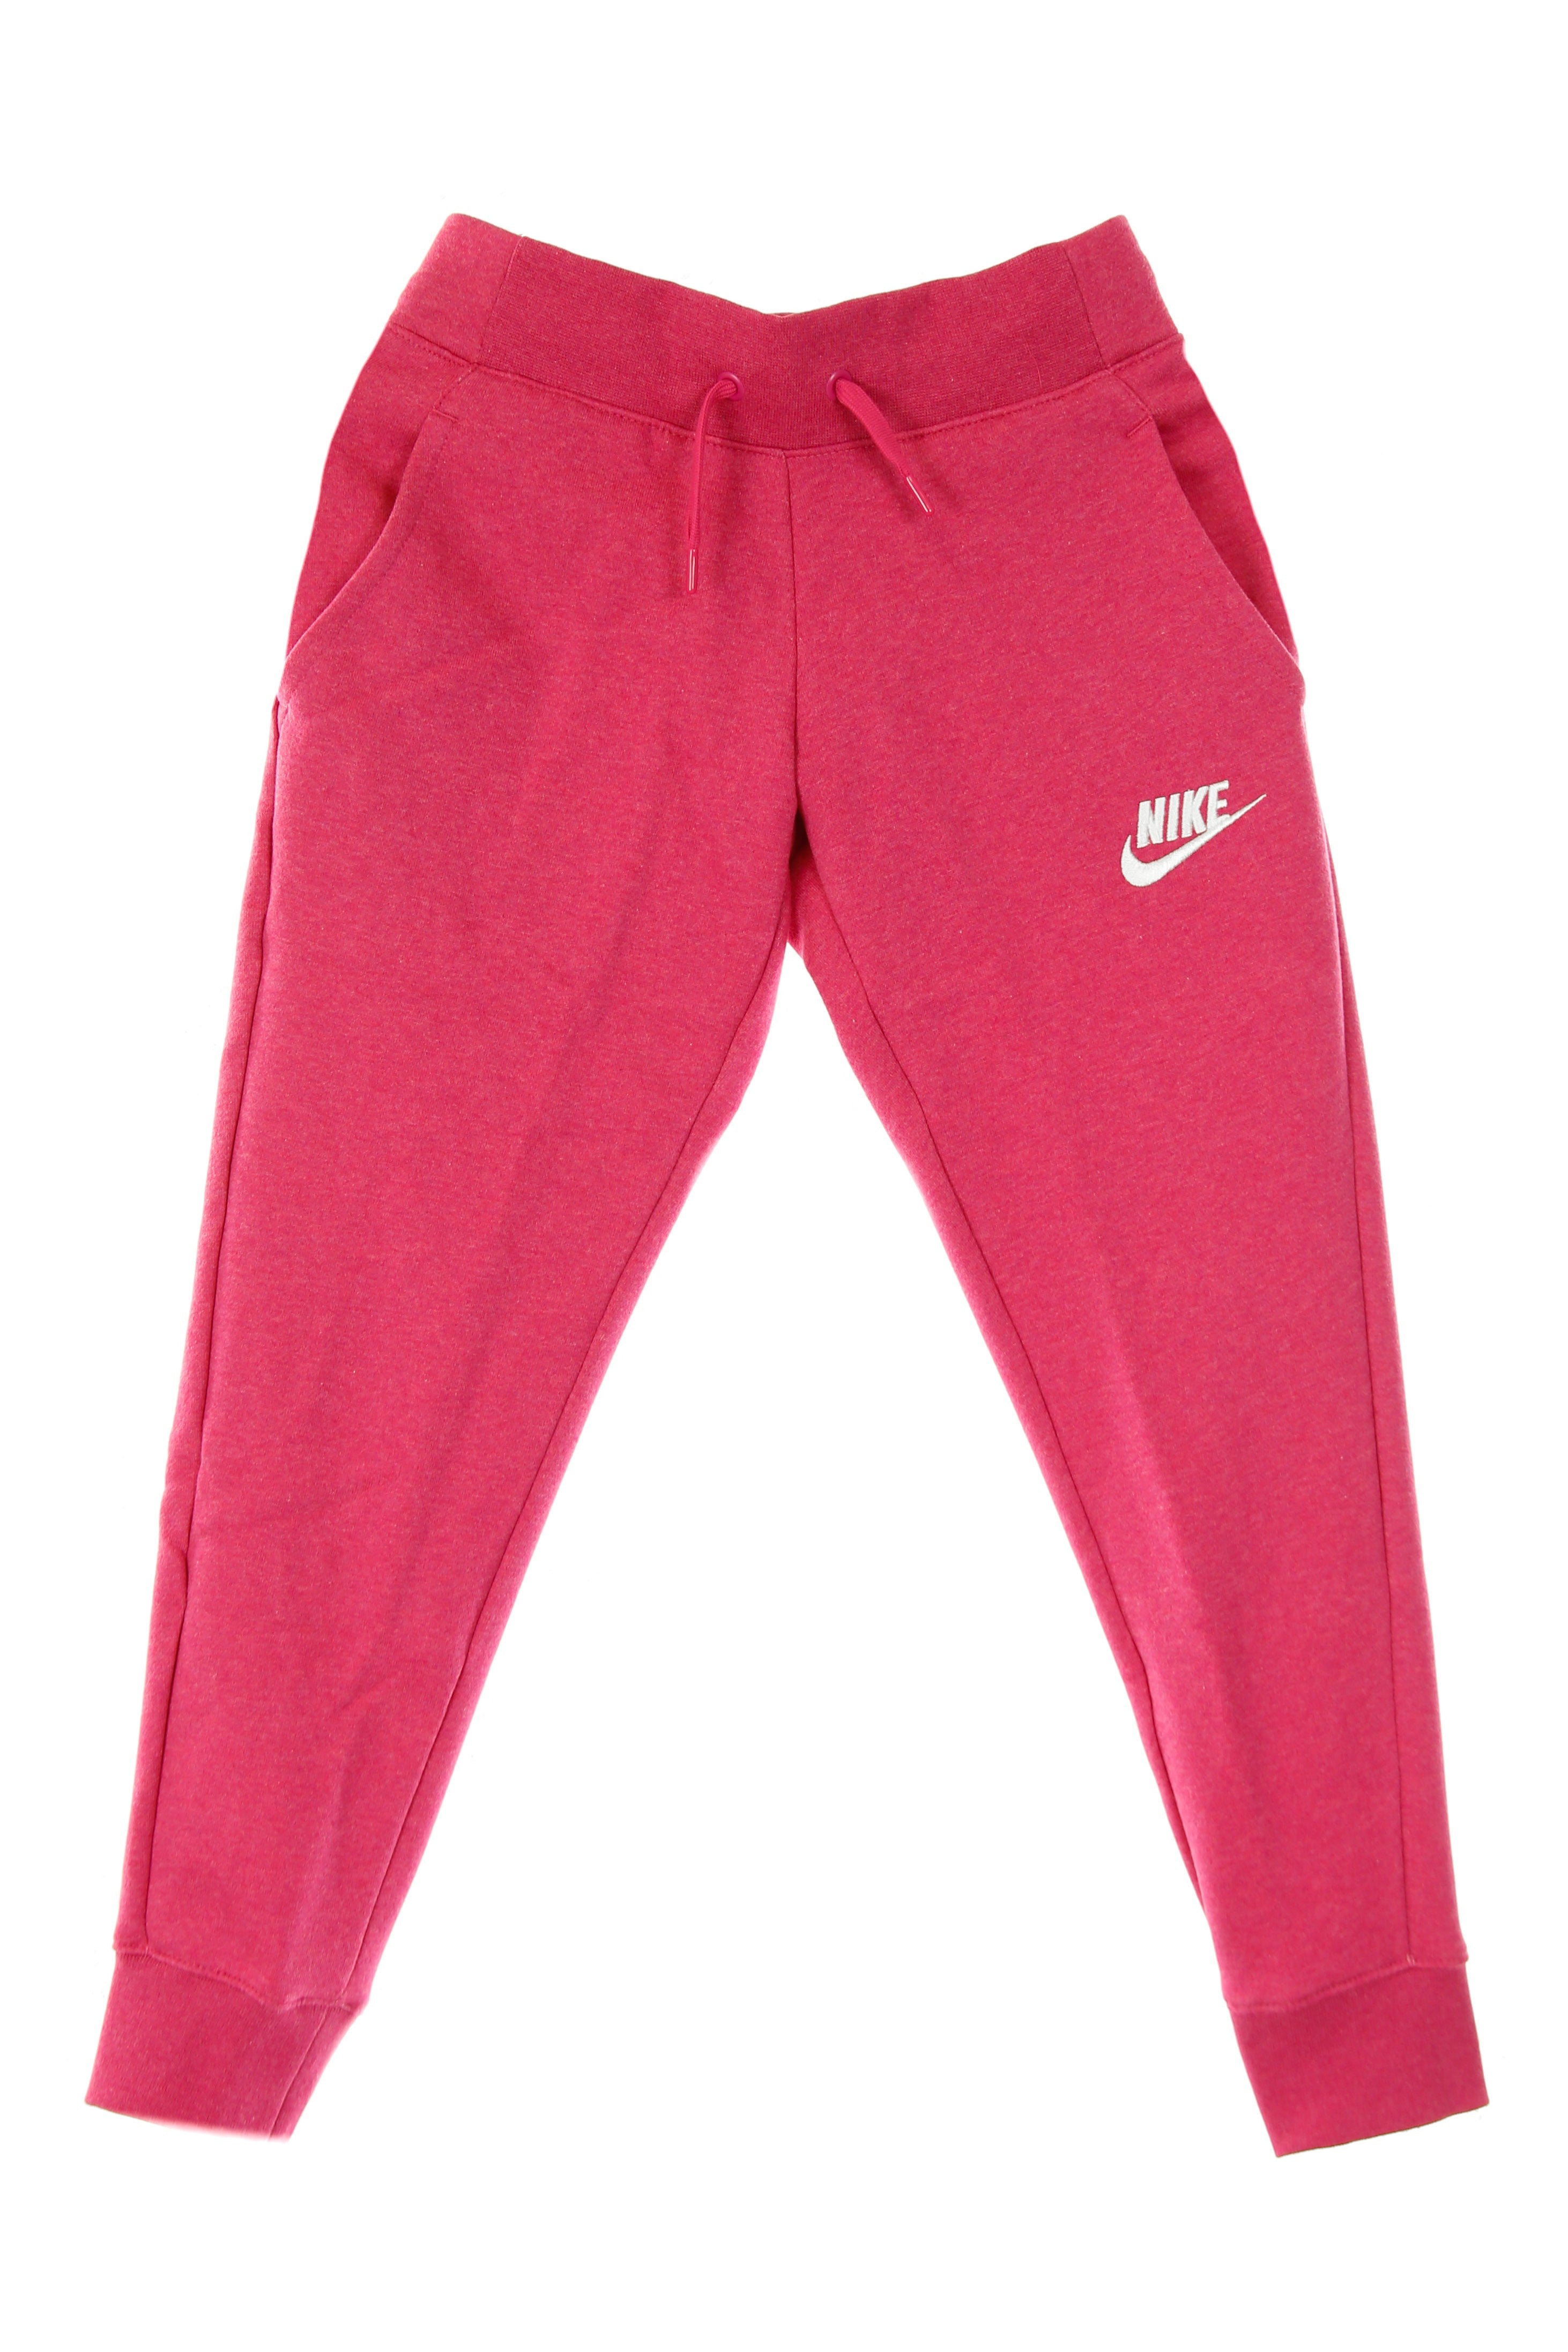 Nike, Pantalone Tuta Felpato Ragazza Sportswear Pant, 